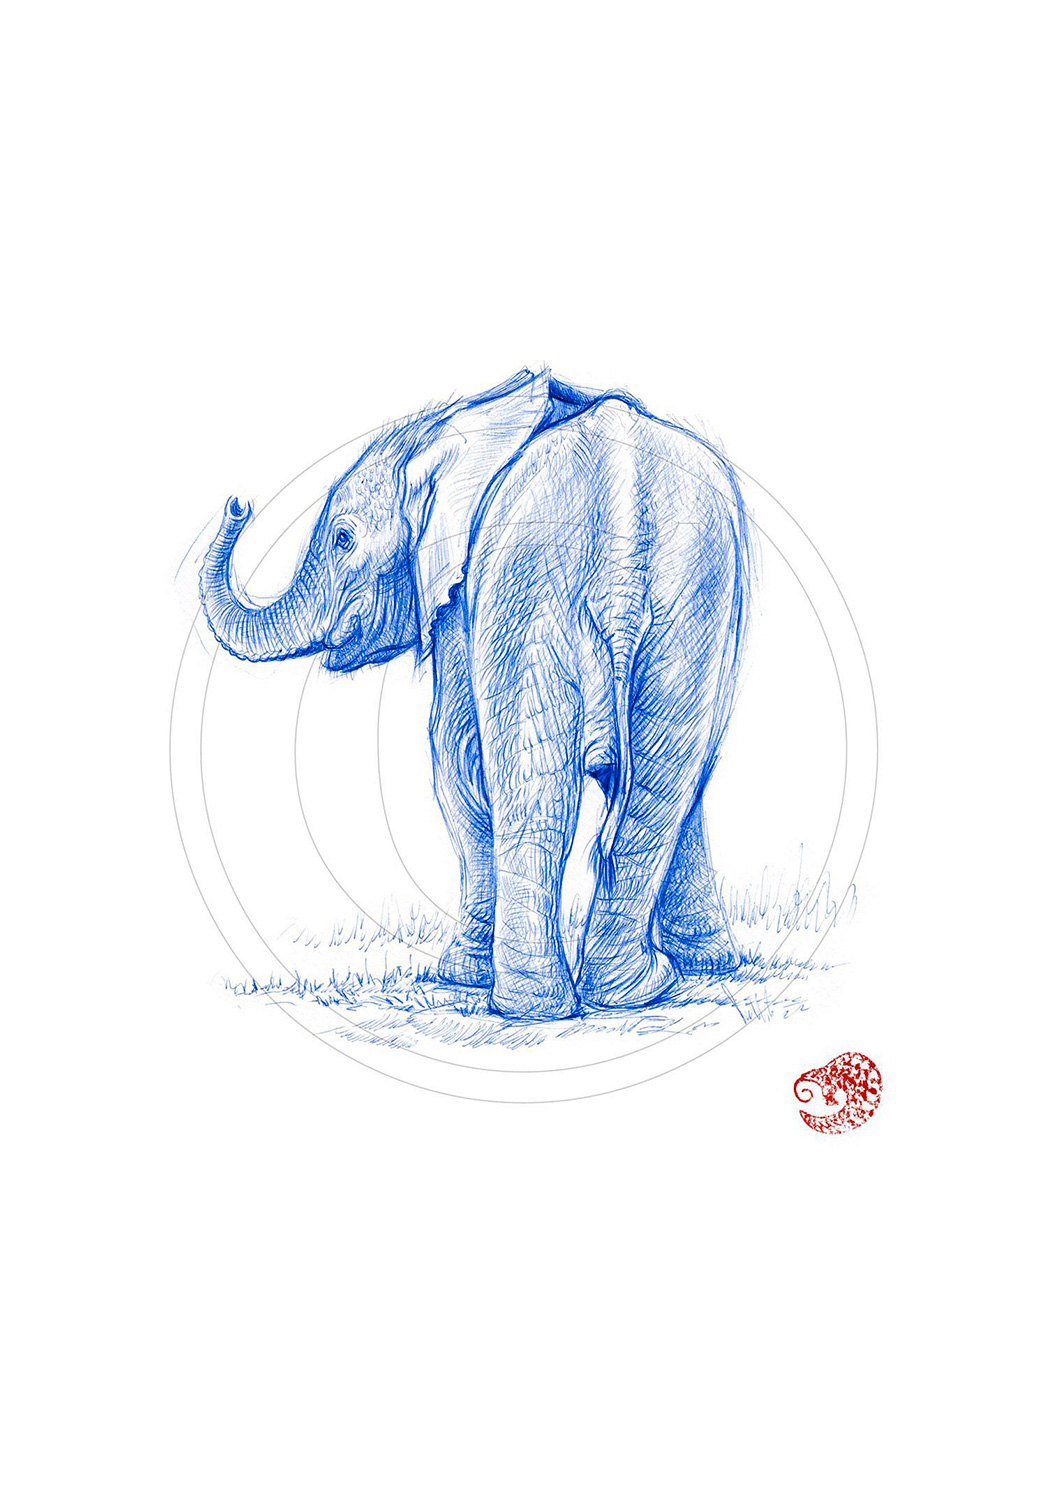 Marcello-art: Wish Card 328 - Baby elephant